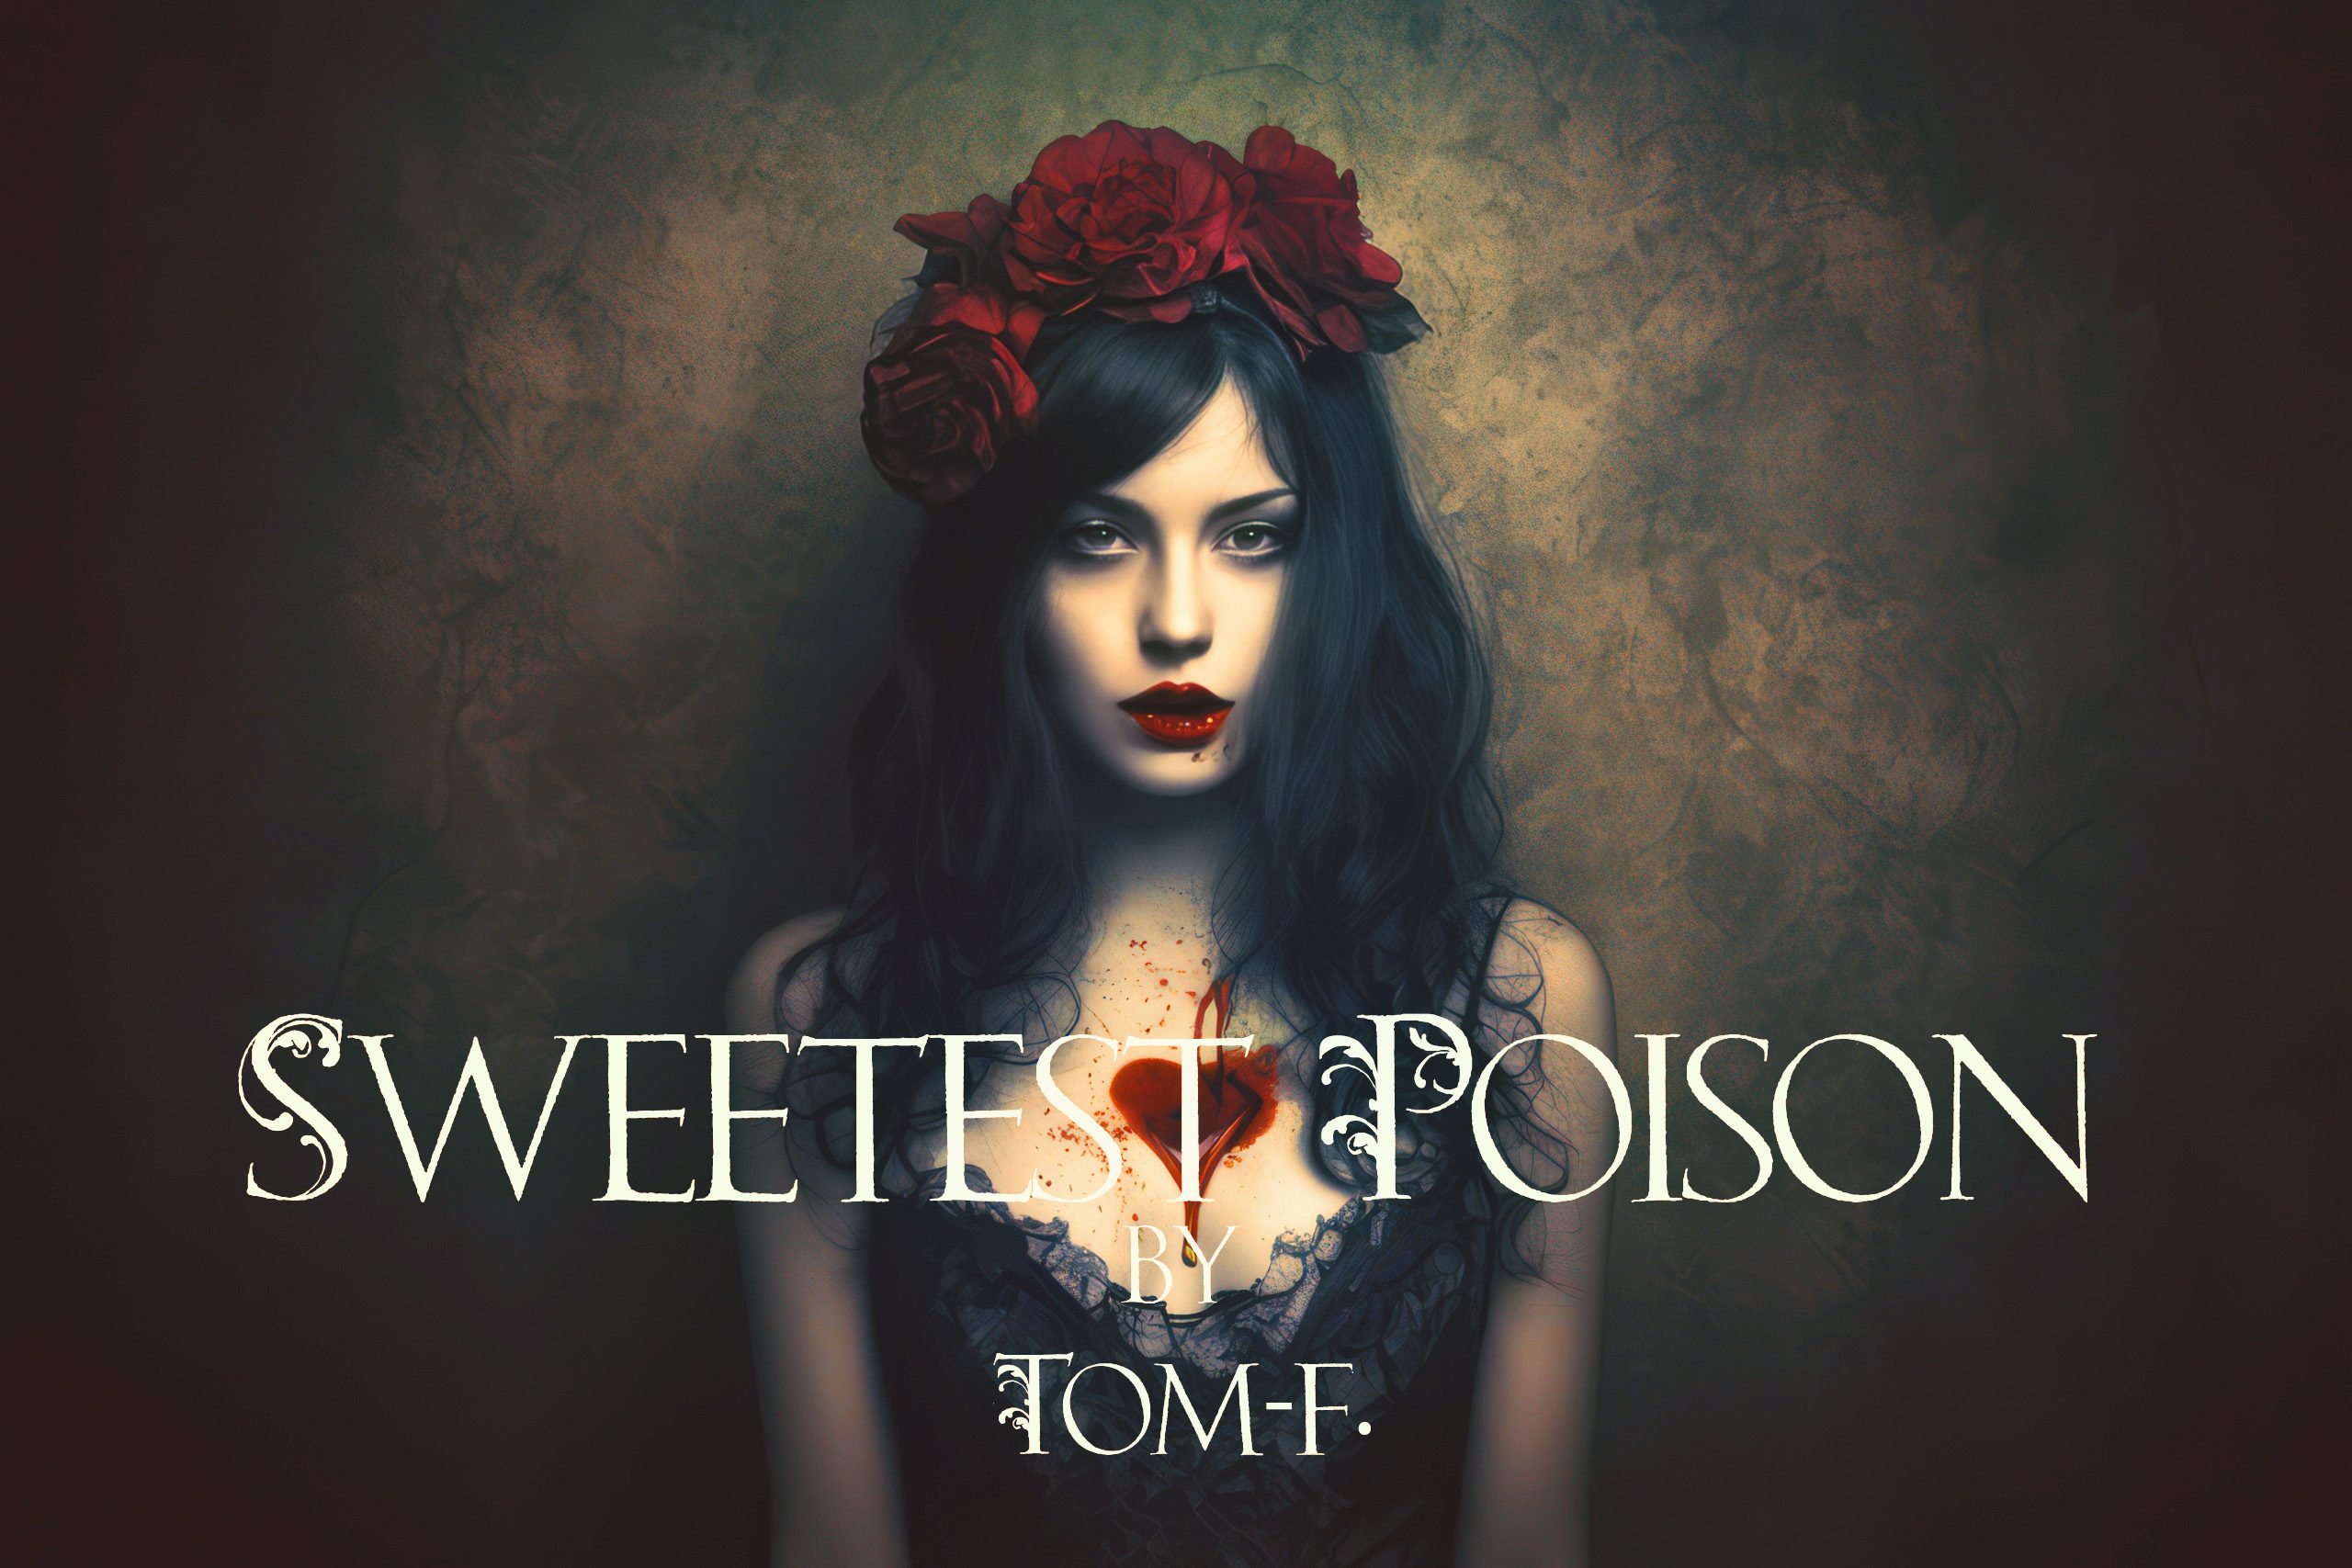 Sweetest Poison